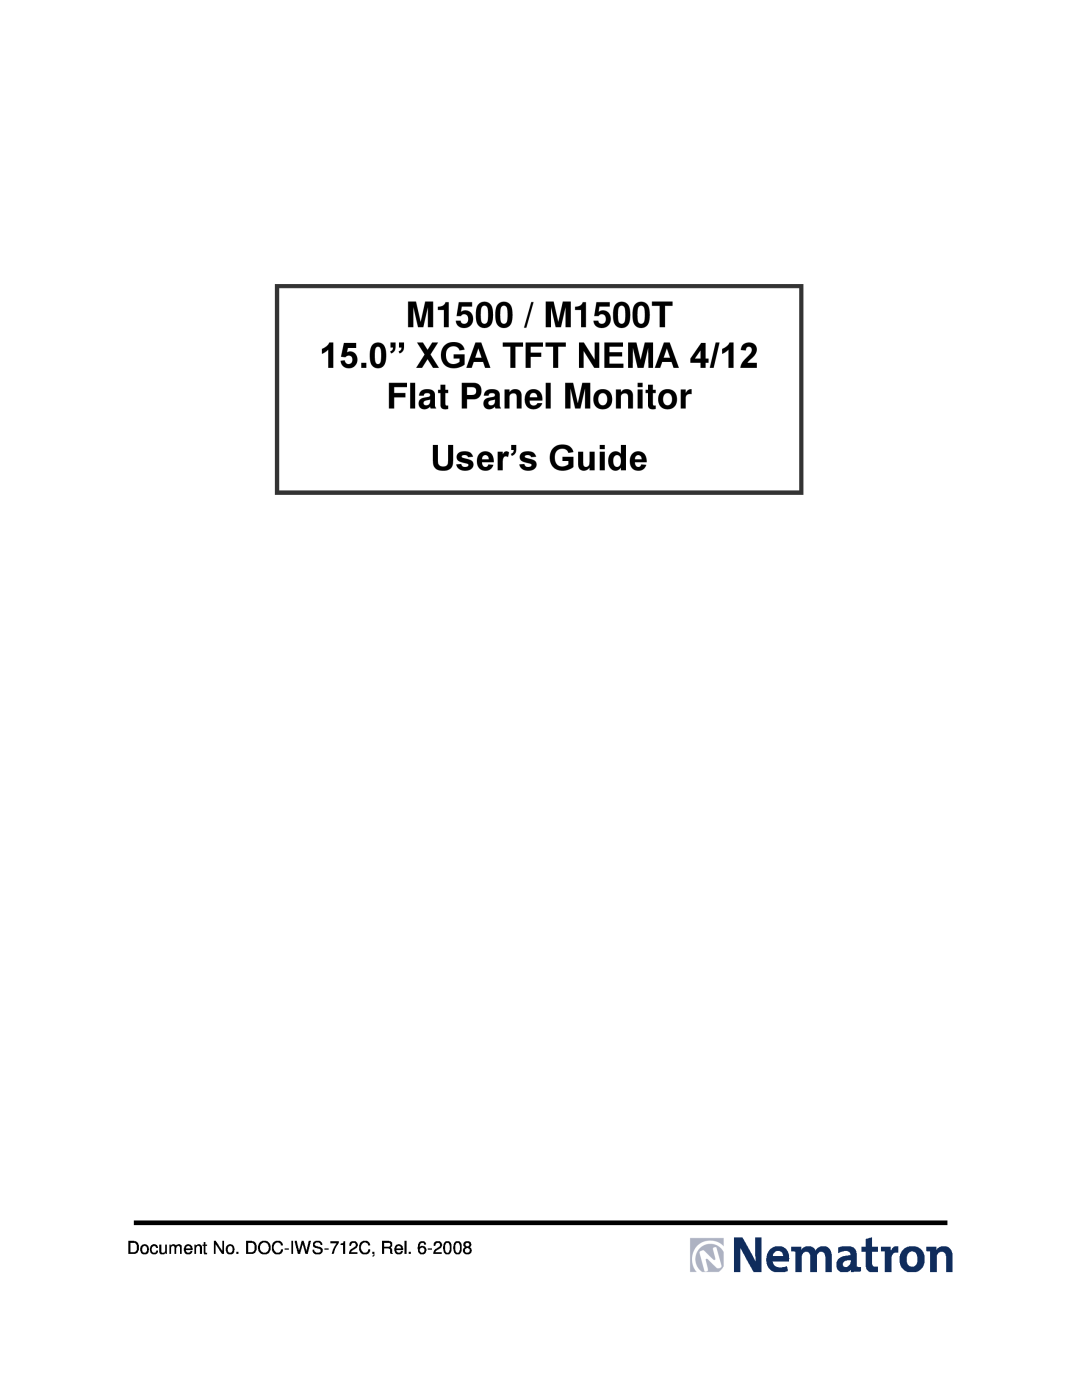 Philips manual M1500 / M1500T 15.0” XGA TFT NEMA 4/12 Flat Panel Monitor, User’s Guide, Document No. DOC-IWS-712C, Rel 